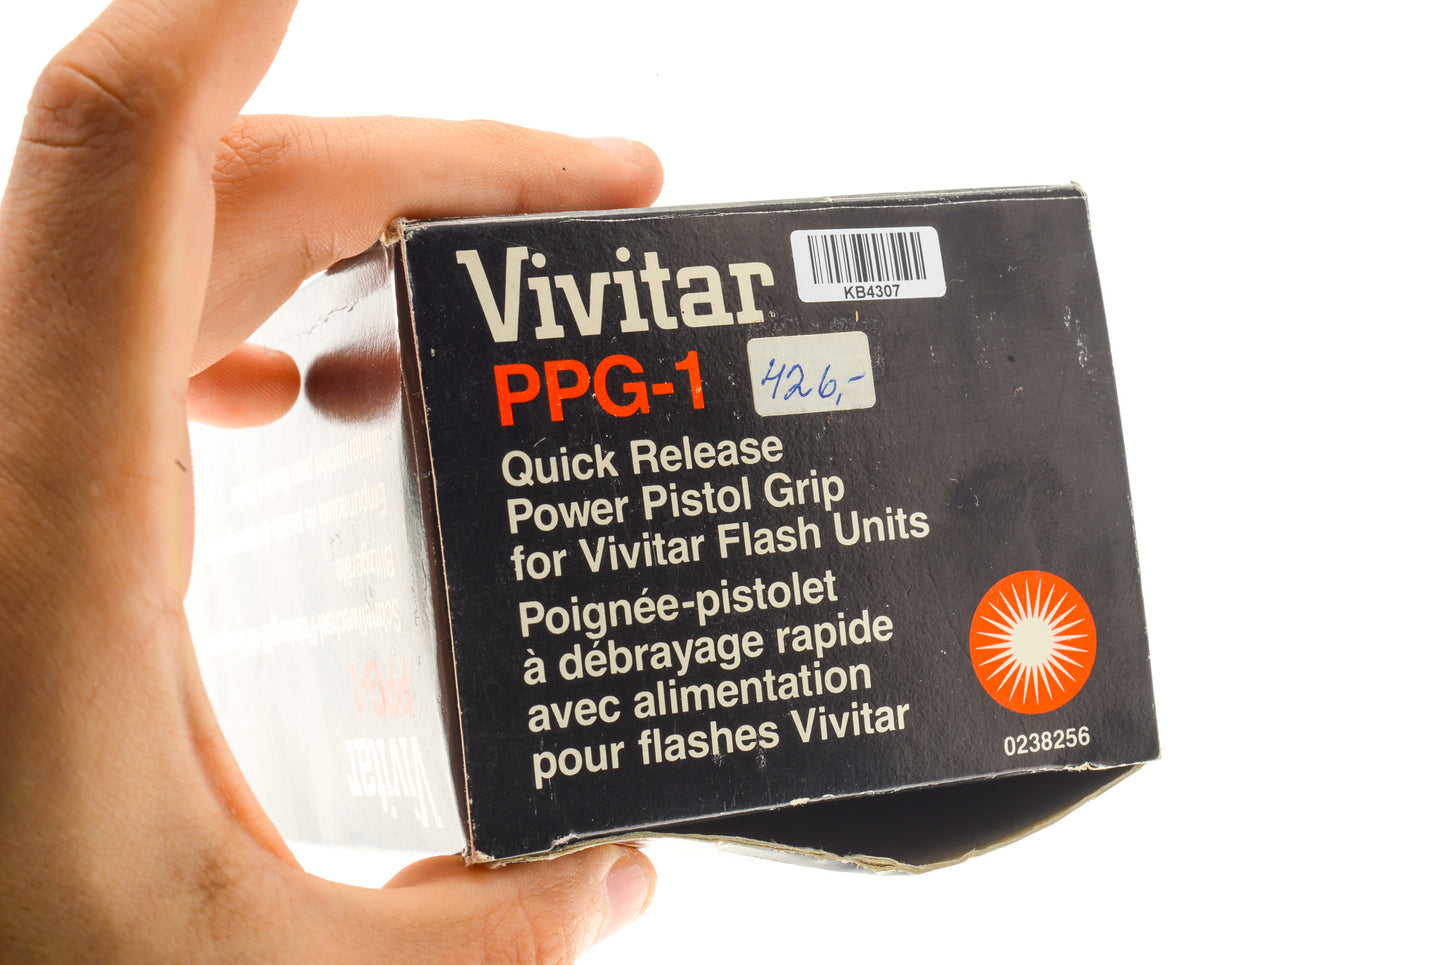 Vivitar PPG-1 Quick Release Power Pistol Grip